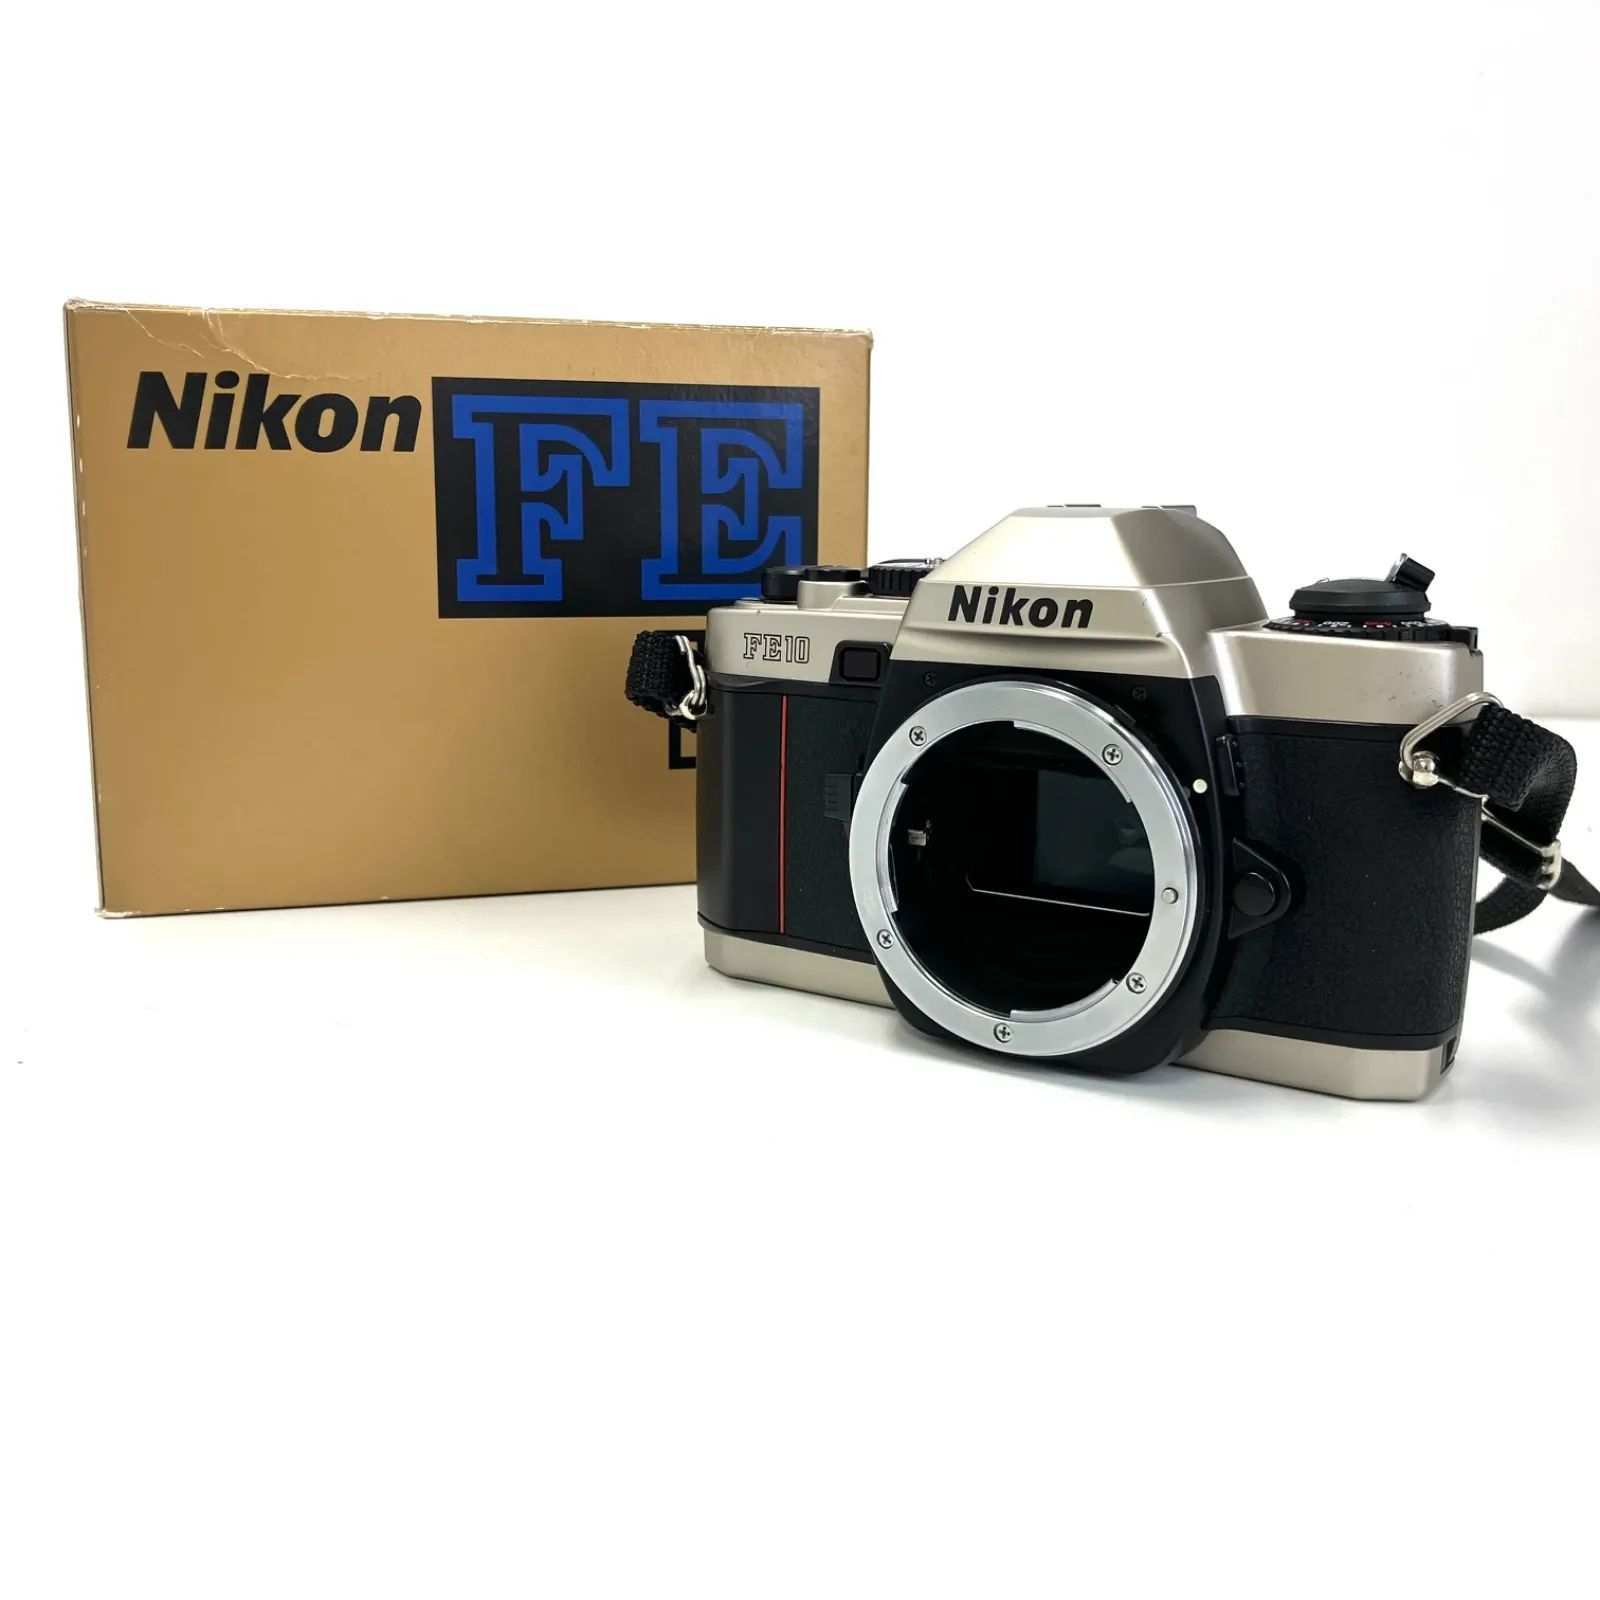 675752】 Nikon FE10 ボディ 箱付き 極美品 イーストック。 メルカリ